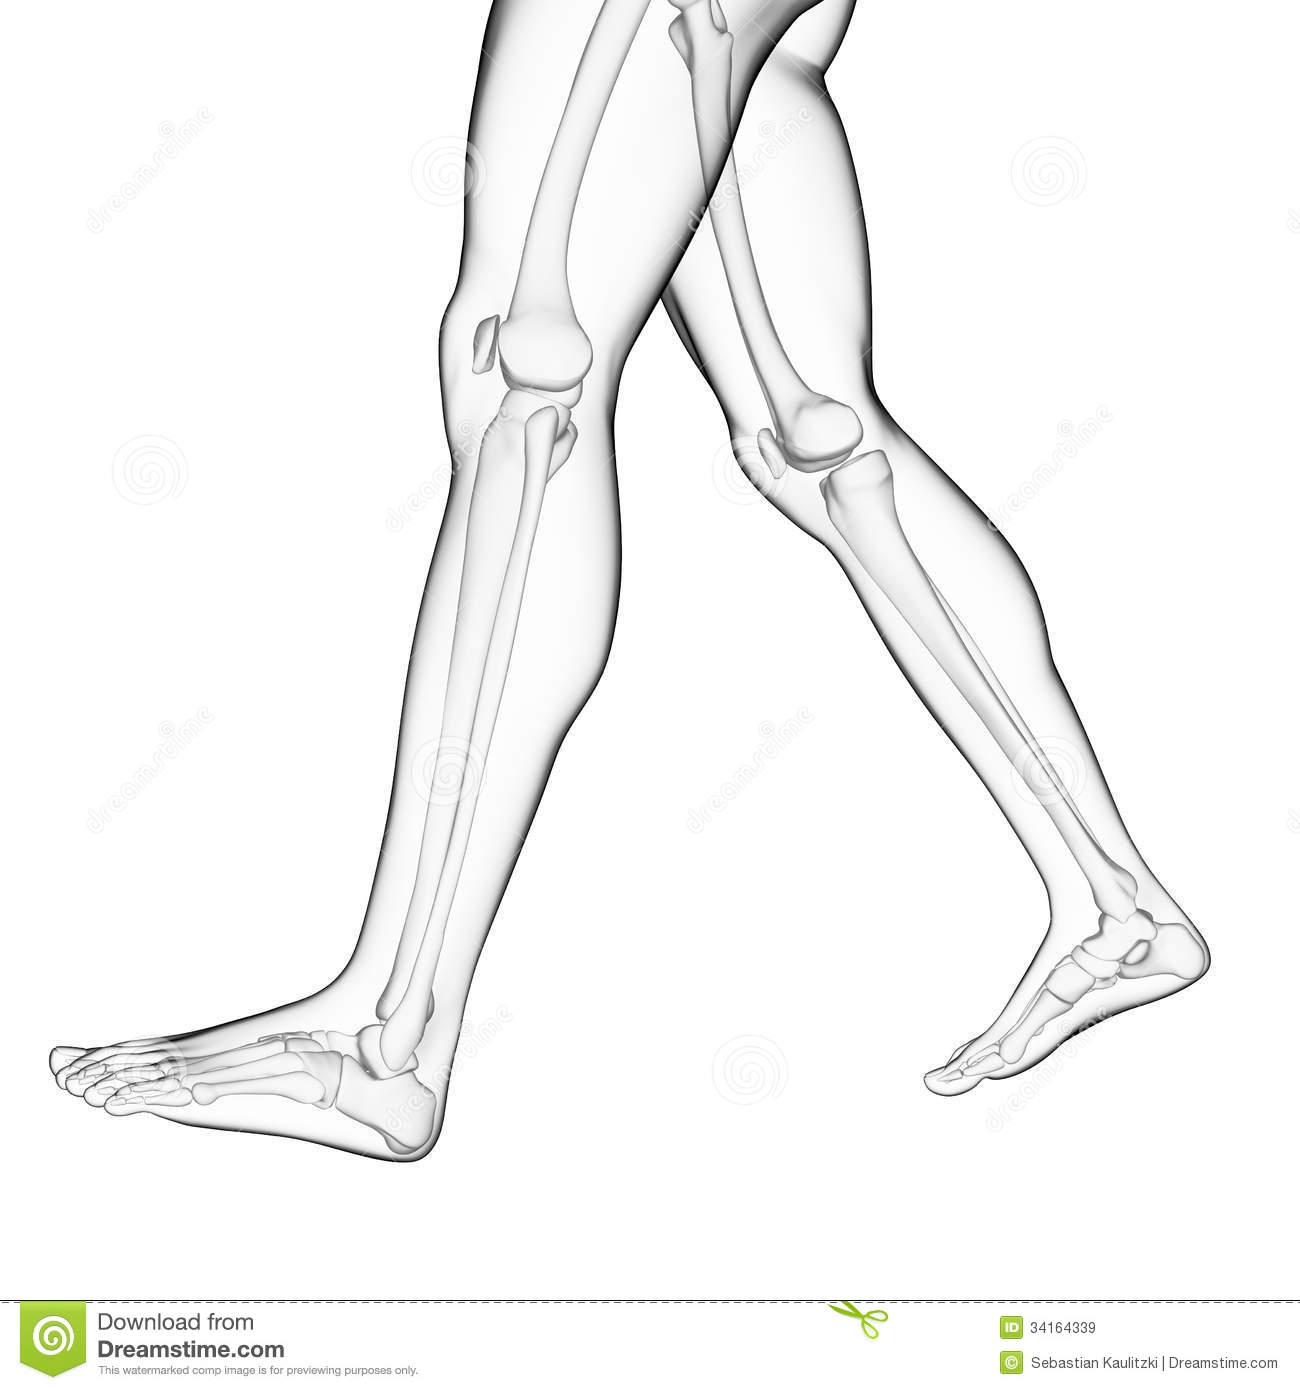 The leg bones